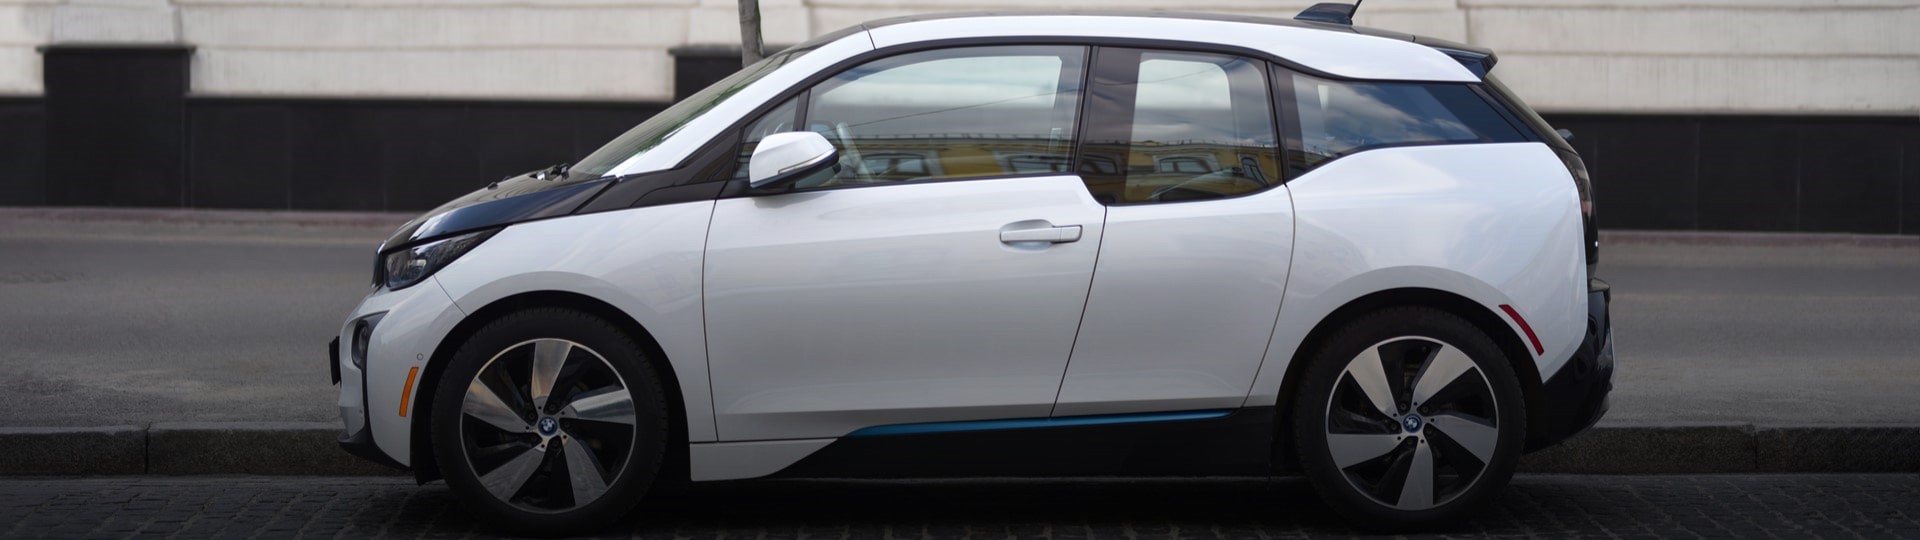 BMW do roku 2030 zvýší poměr prodaných elektromobilů na polovinu